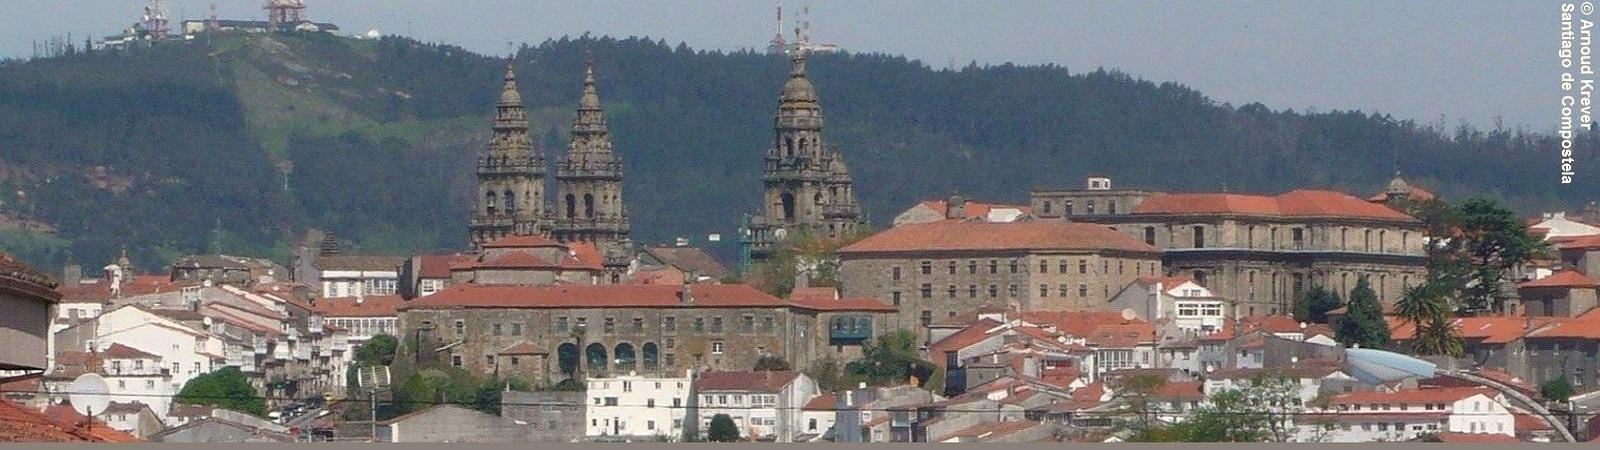 GranadaS 1390 Santiago de Compostela, de kathedraal is te zien